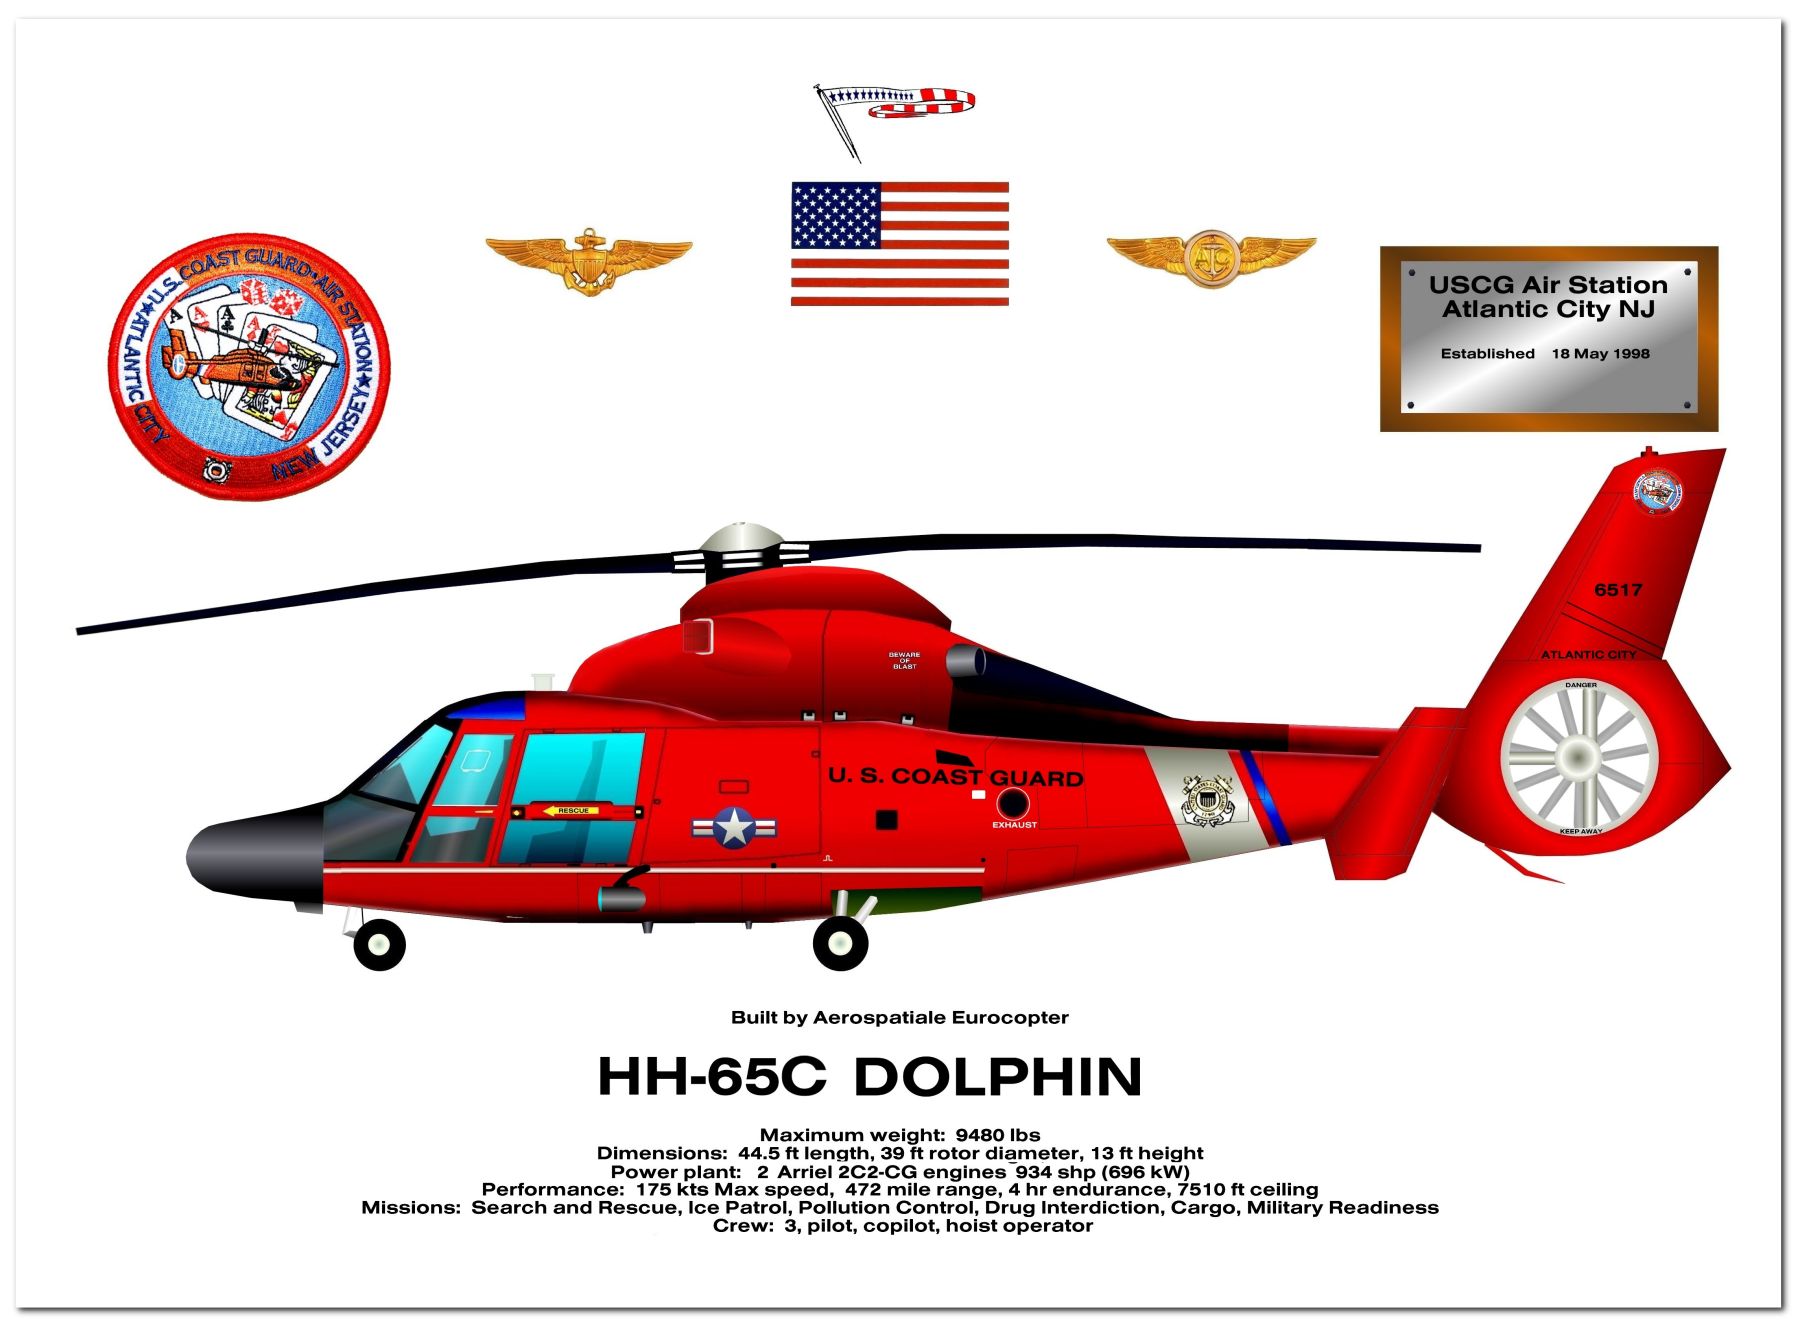 HH/MH 65 Dolphin